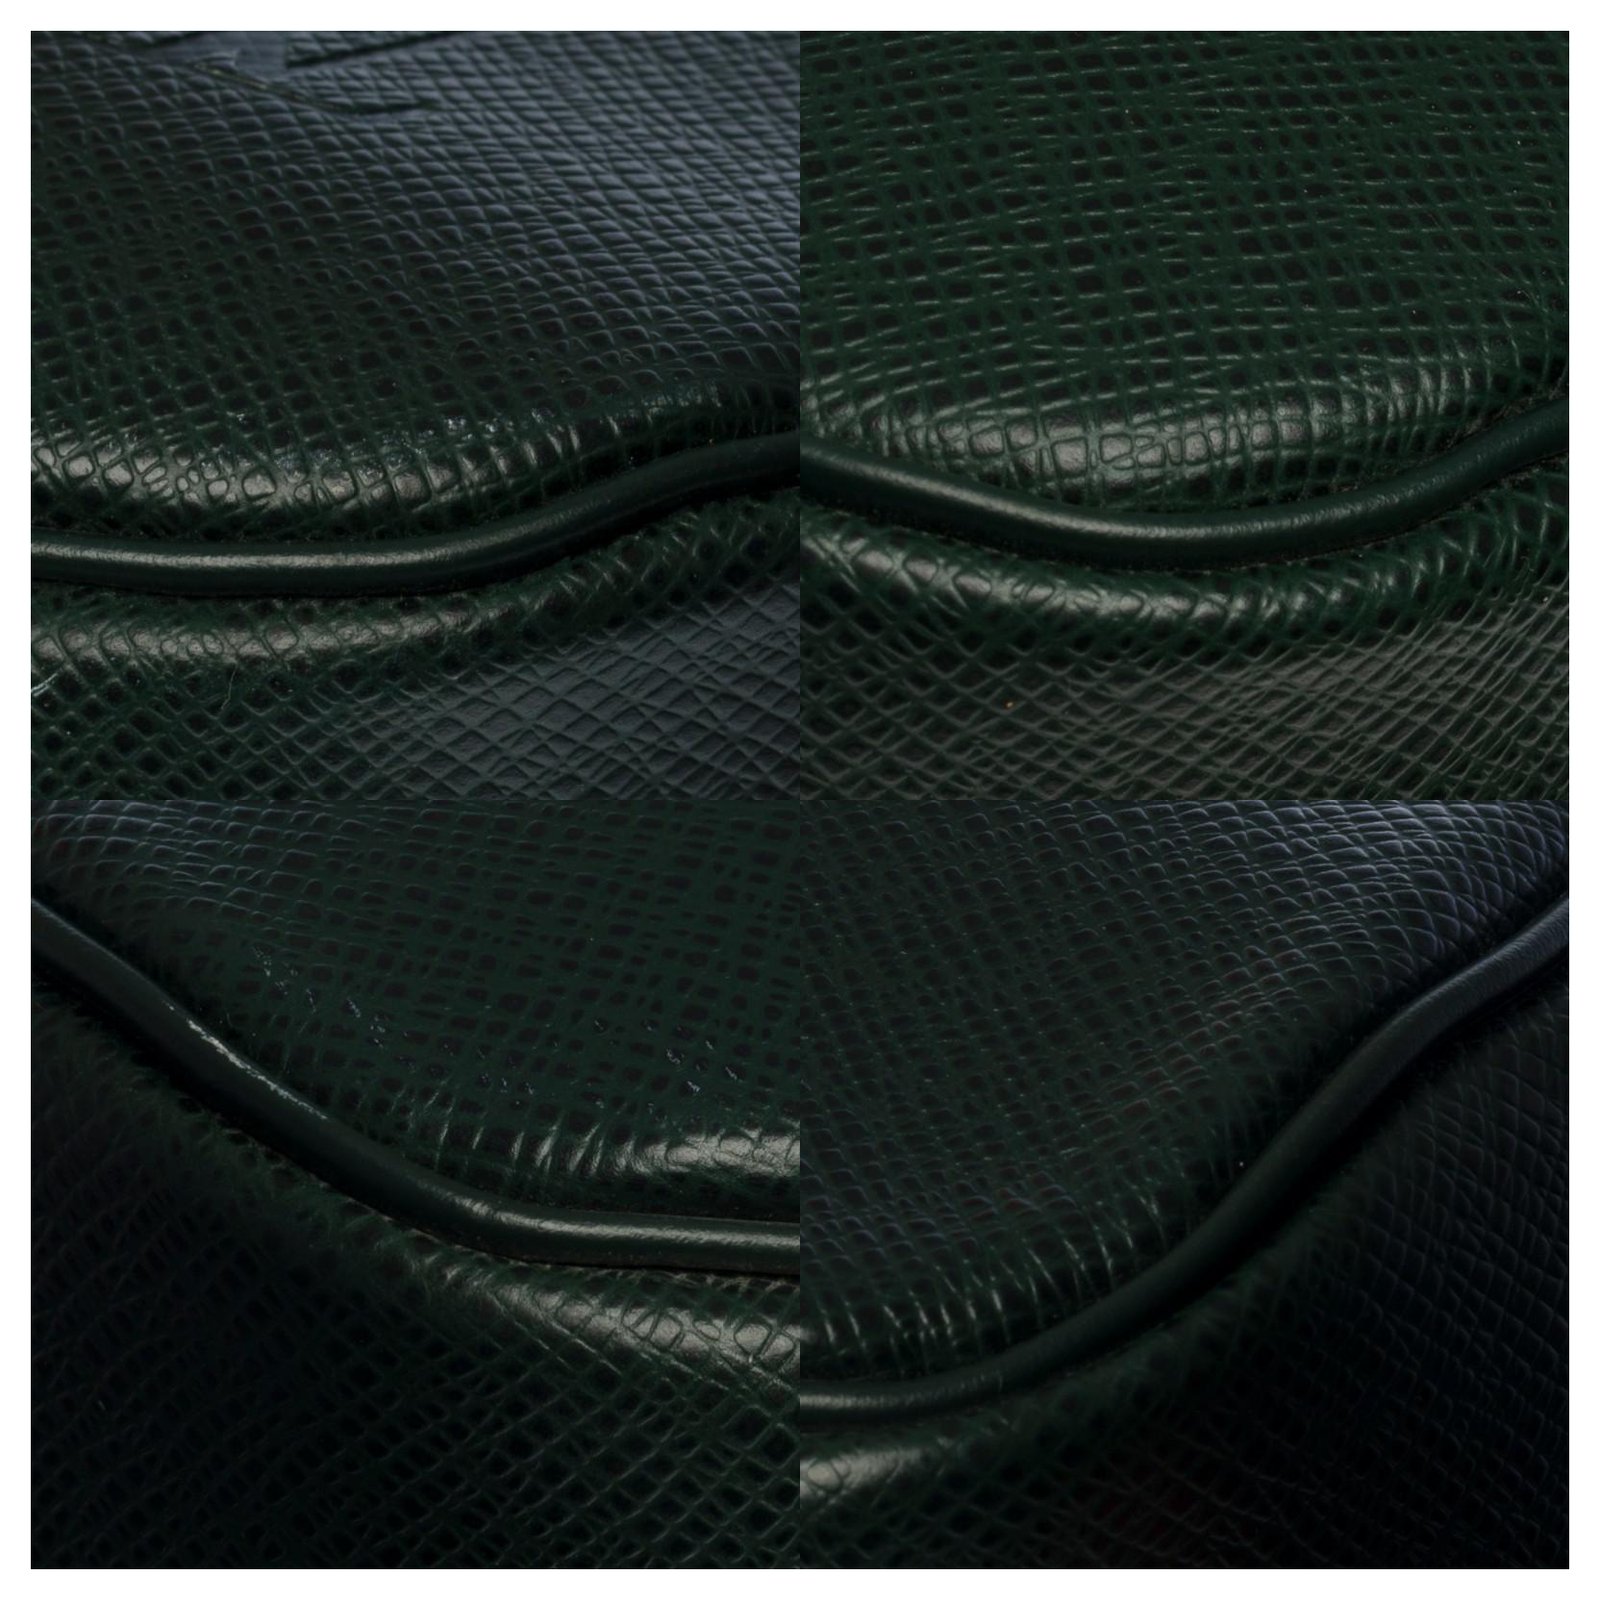 Charming Louis Vuitton Helanga travel bag in green taiga leather